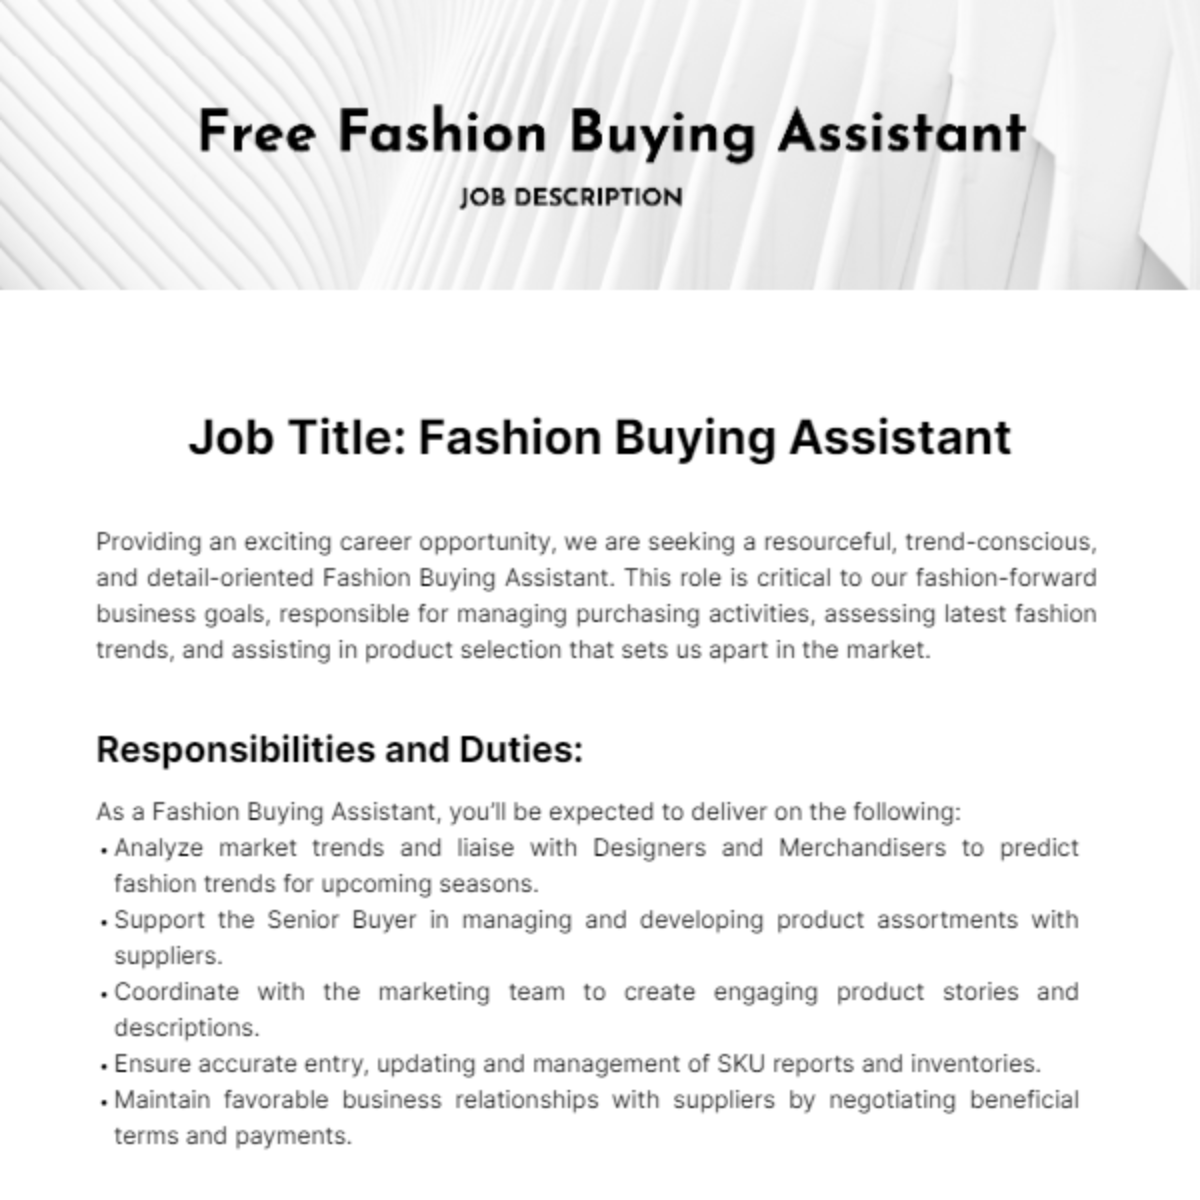 Free Fashion Buying Assistant Job Description Template